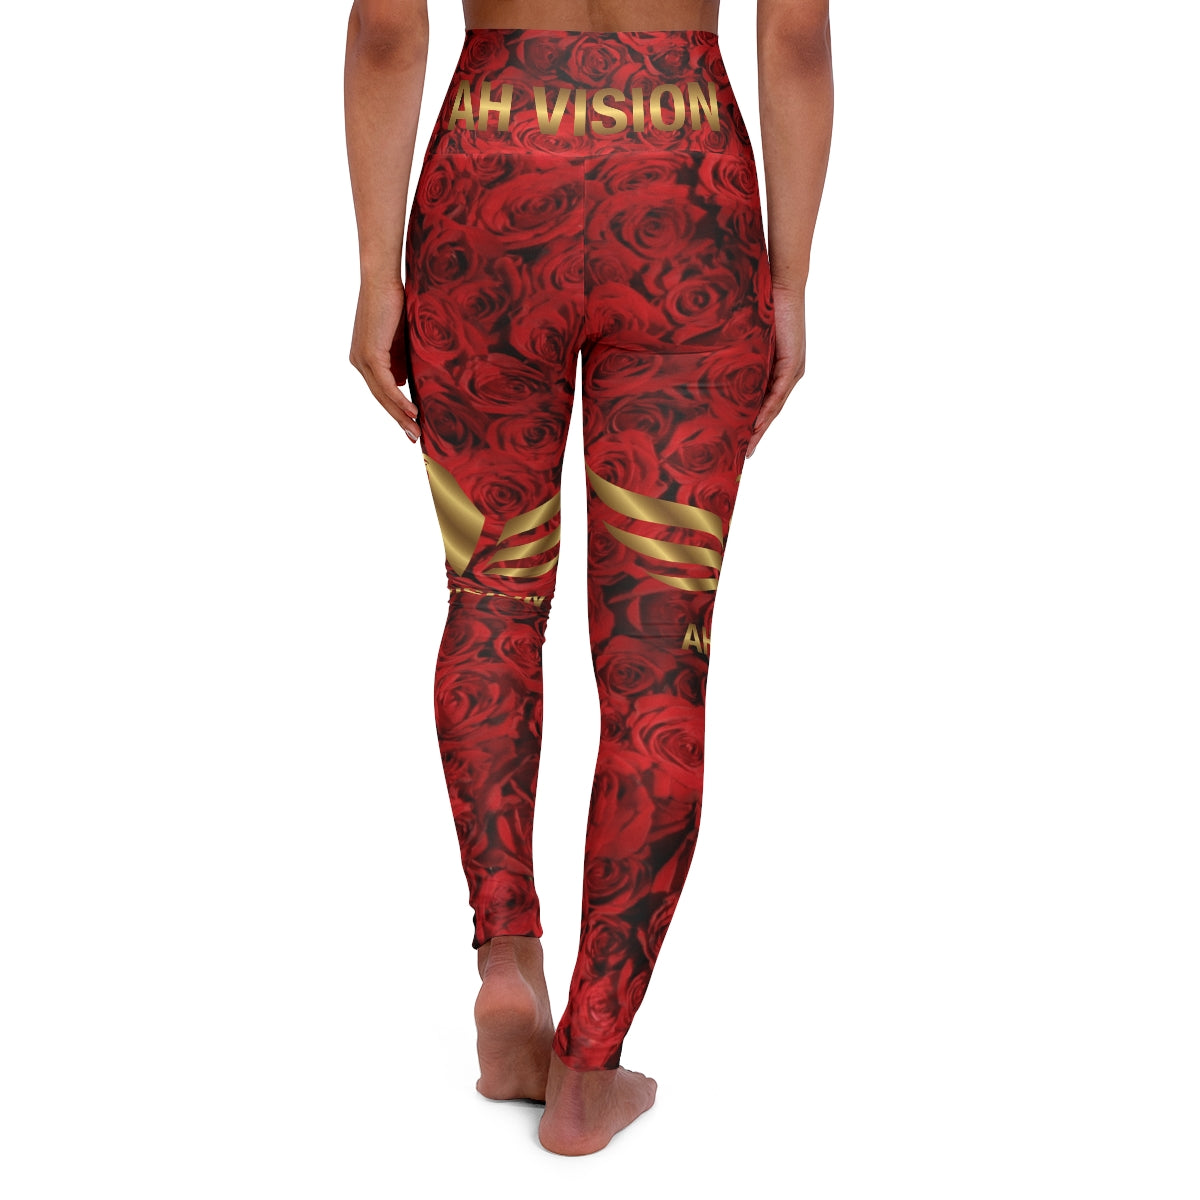 AH Vision Premium High Waisted Red Rose Yoga Leggings - AH VISION